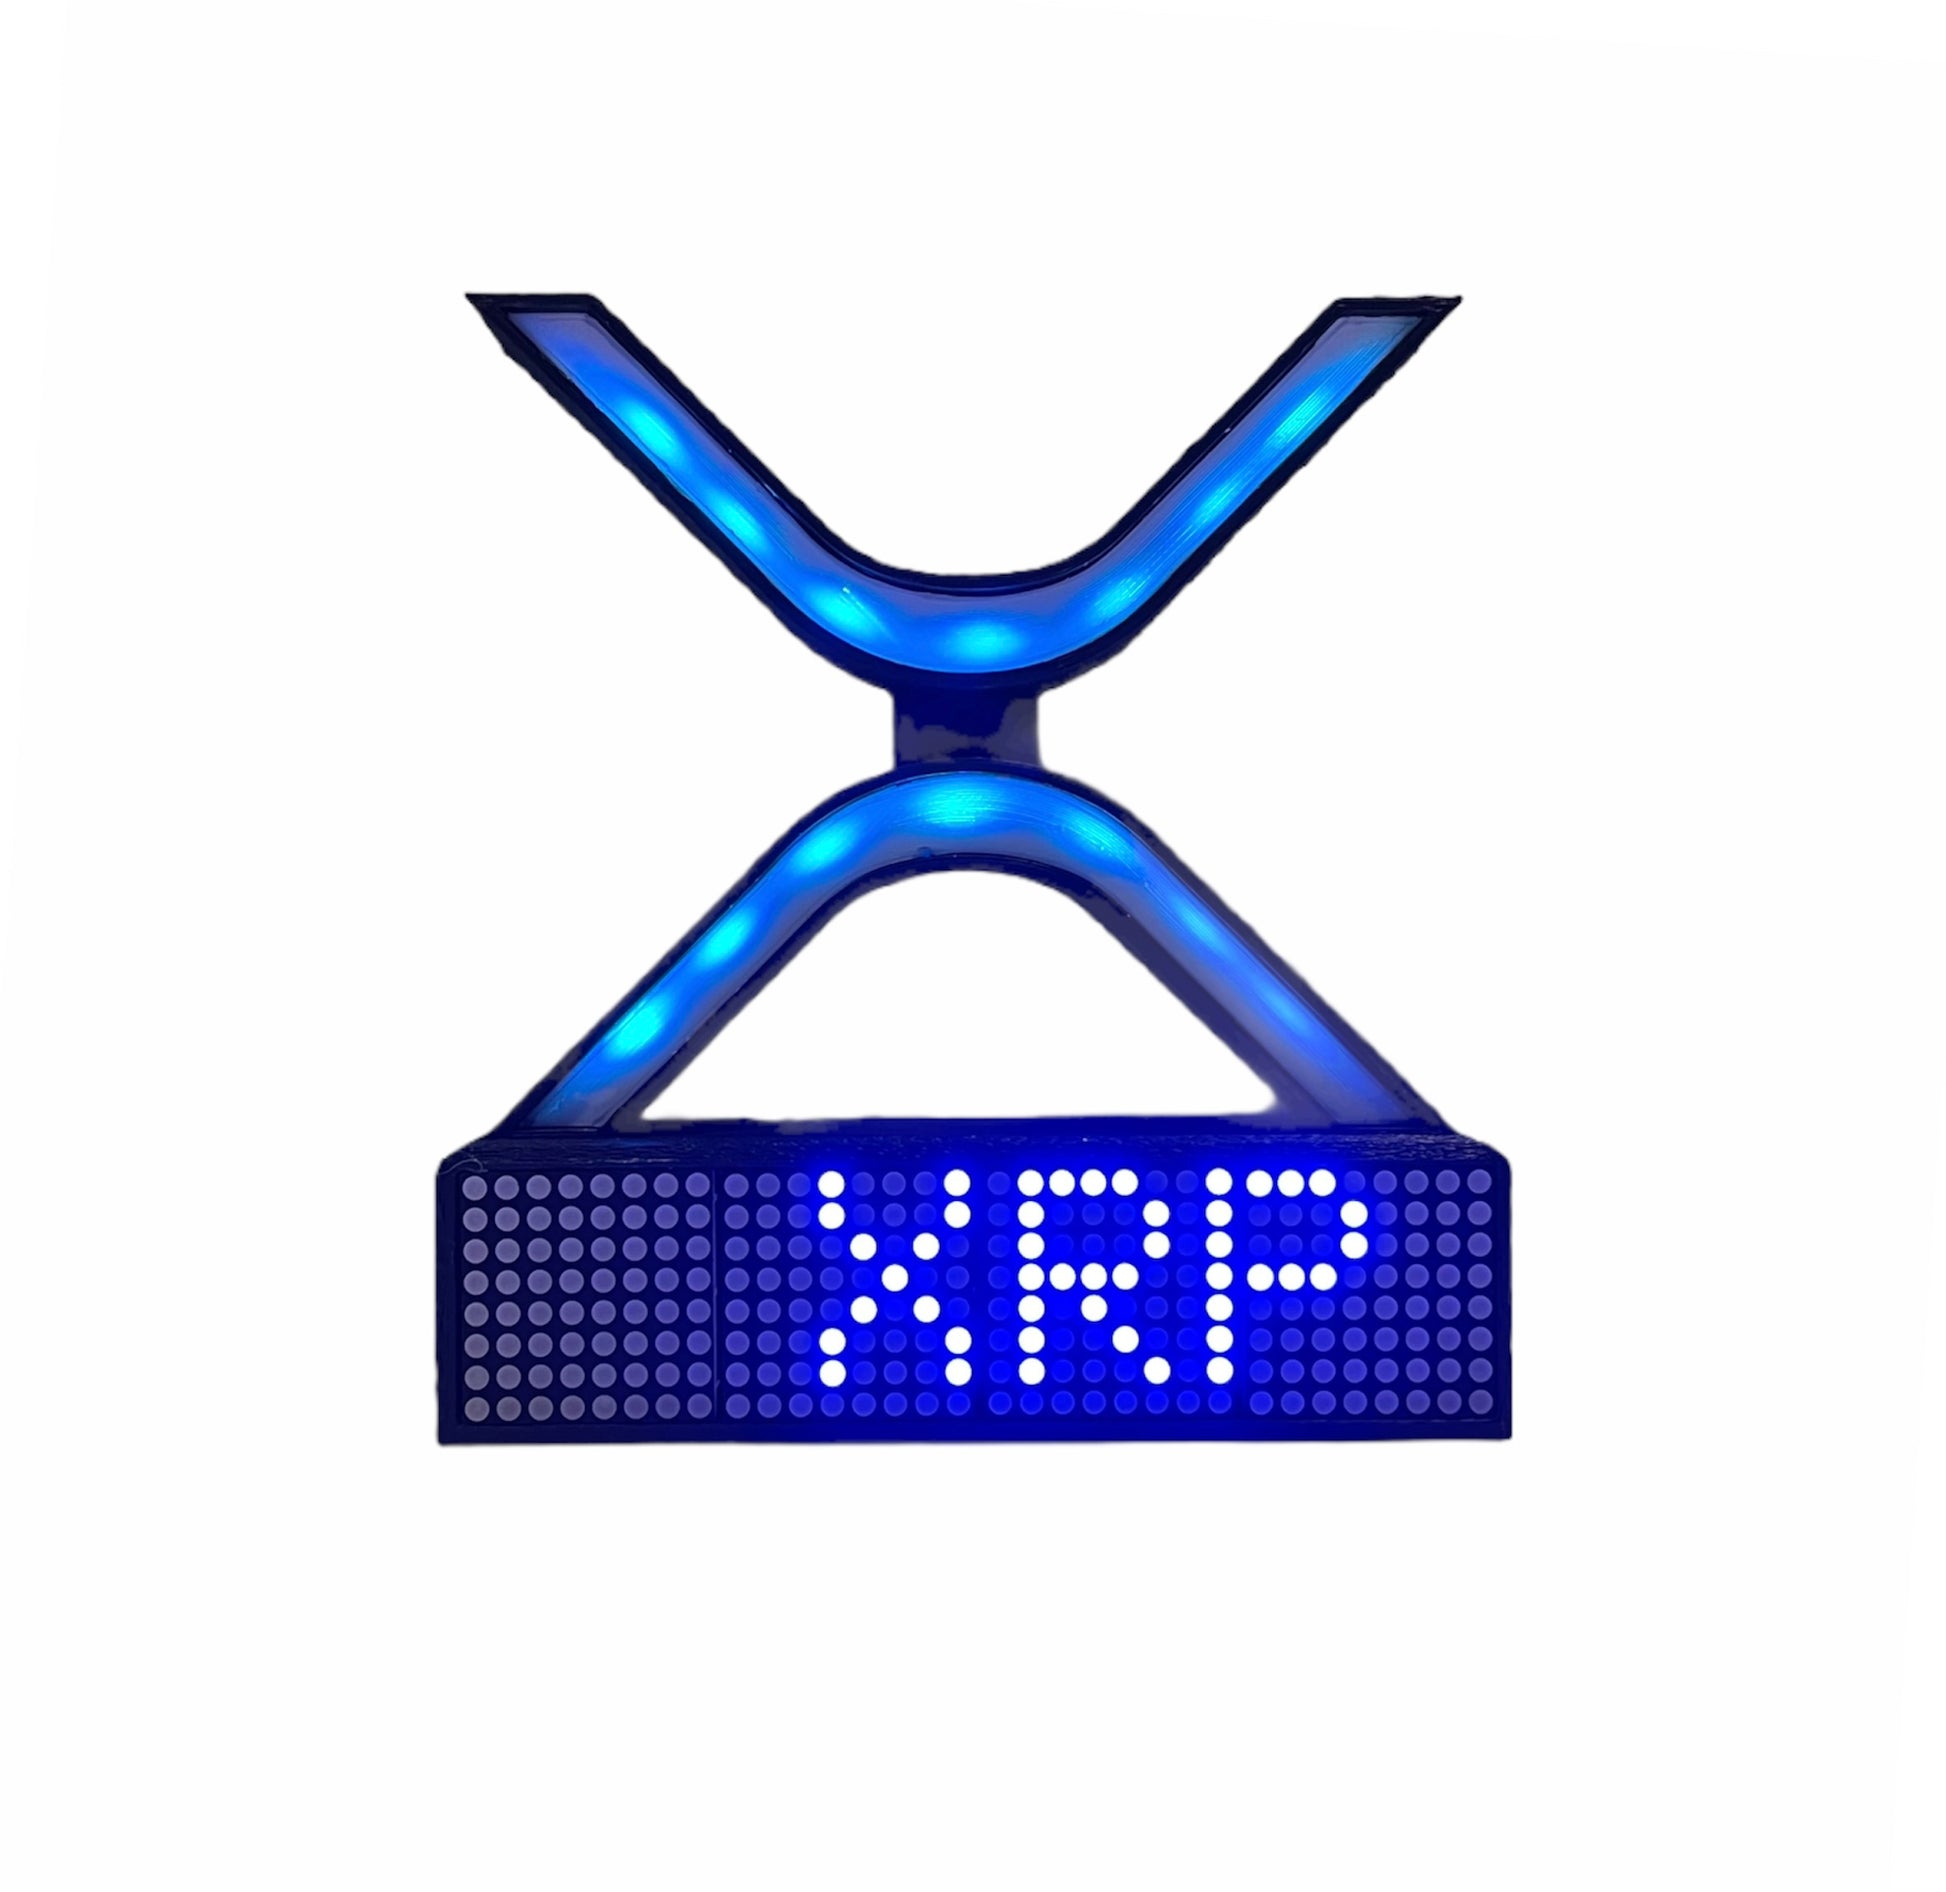 XRP Crypto Coin Price Ticker Matrix Display Wi-Fi - Crypto Coin Display